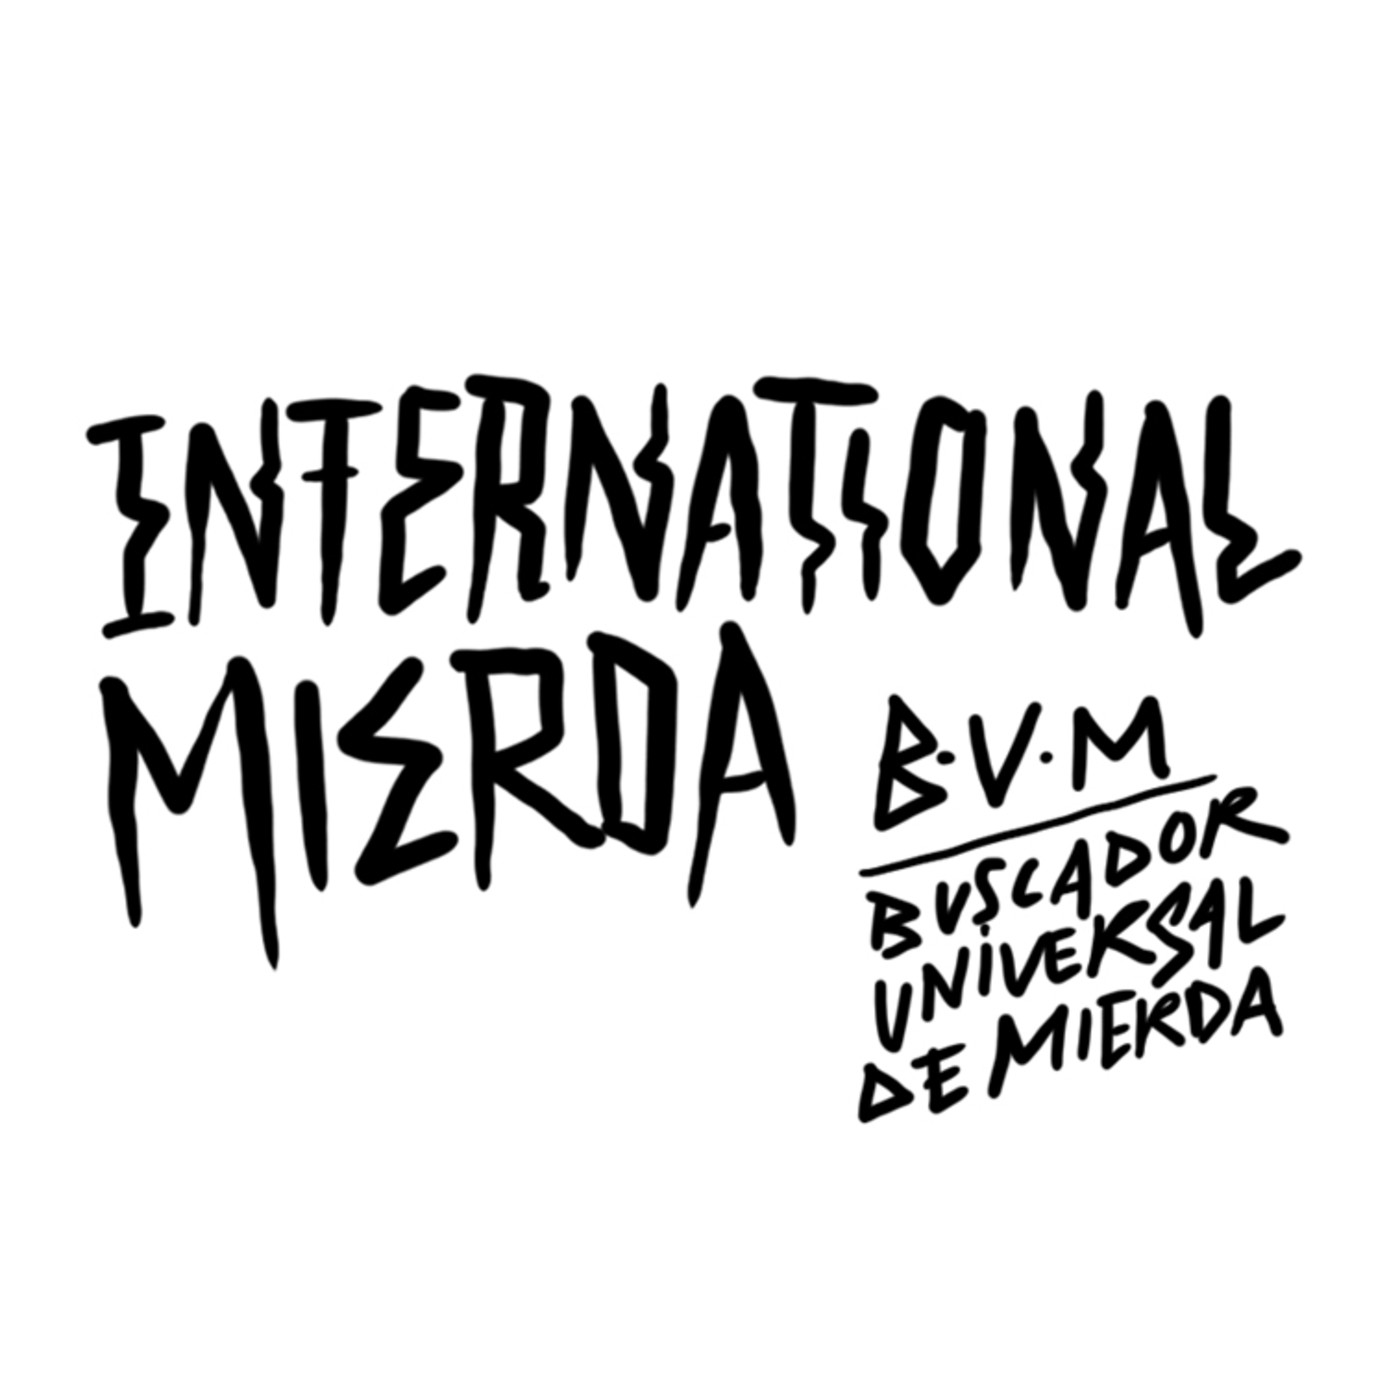 International Mierda